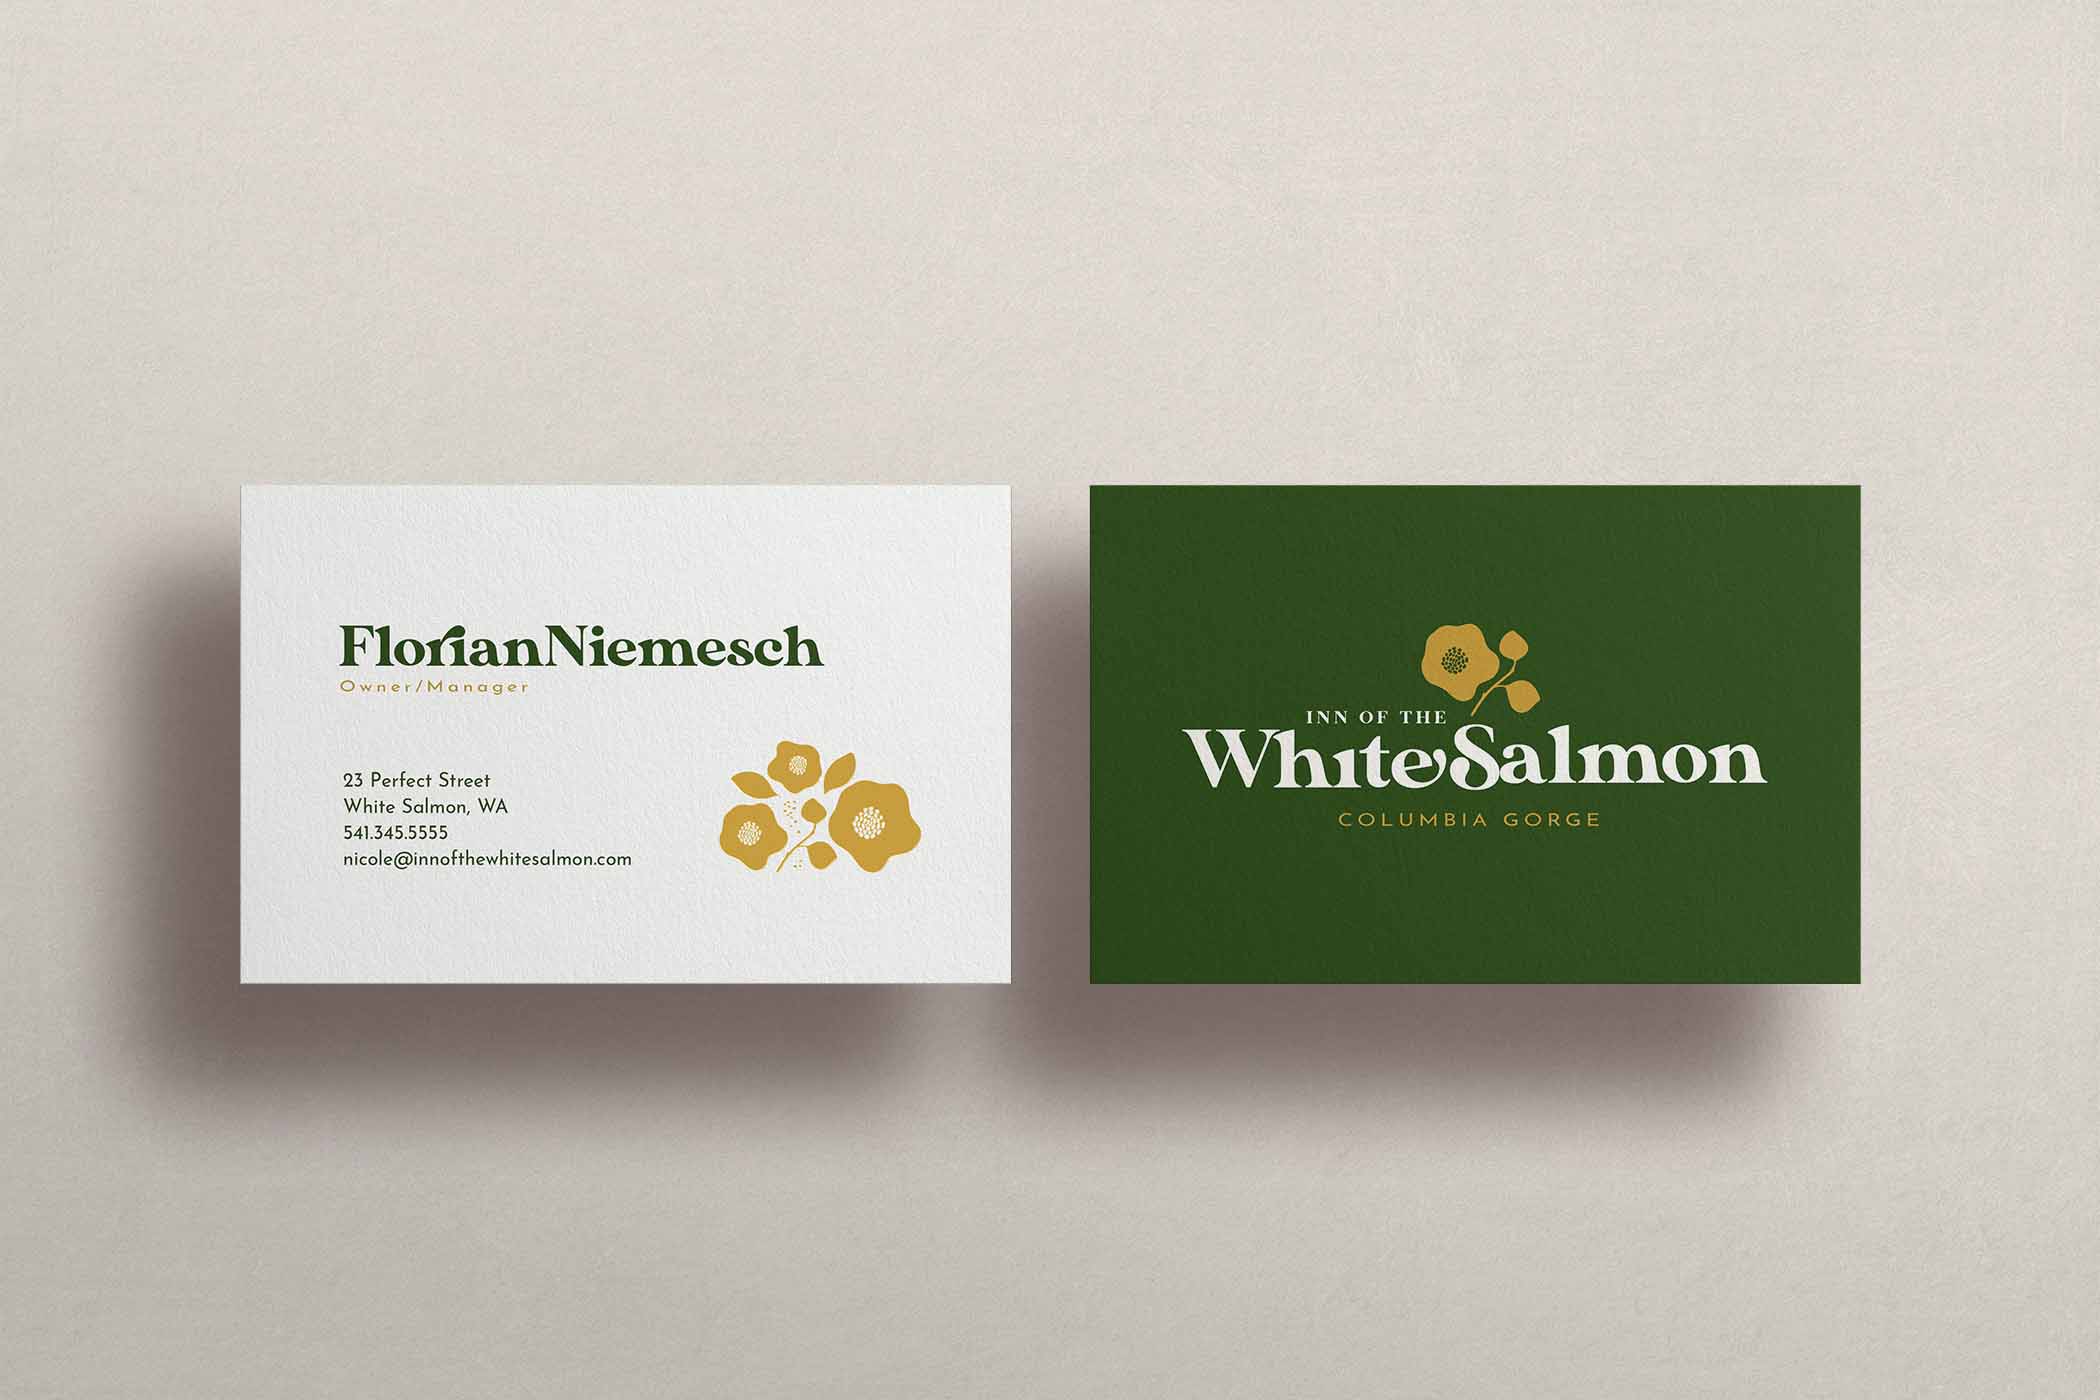 Business card design for Inn of the White Salmon